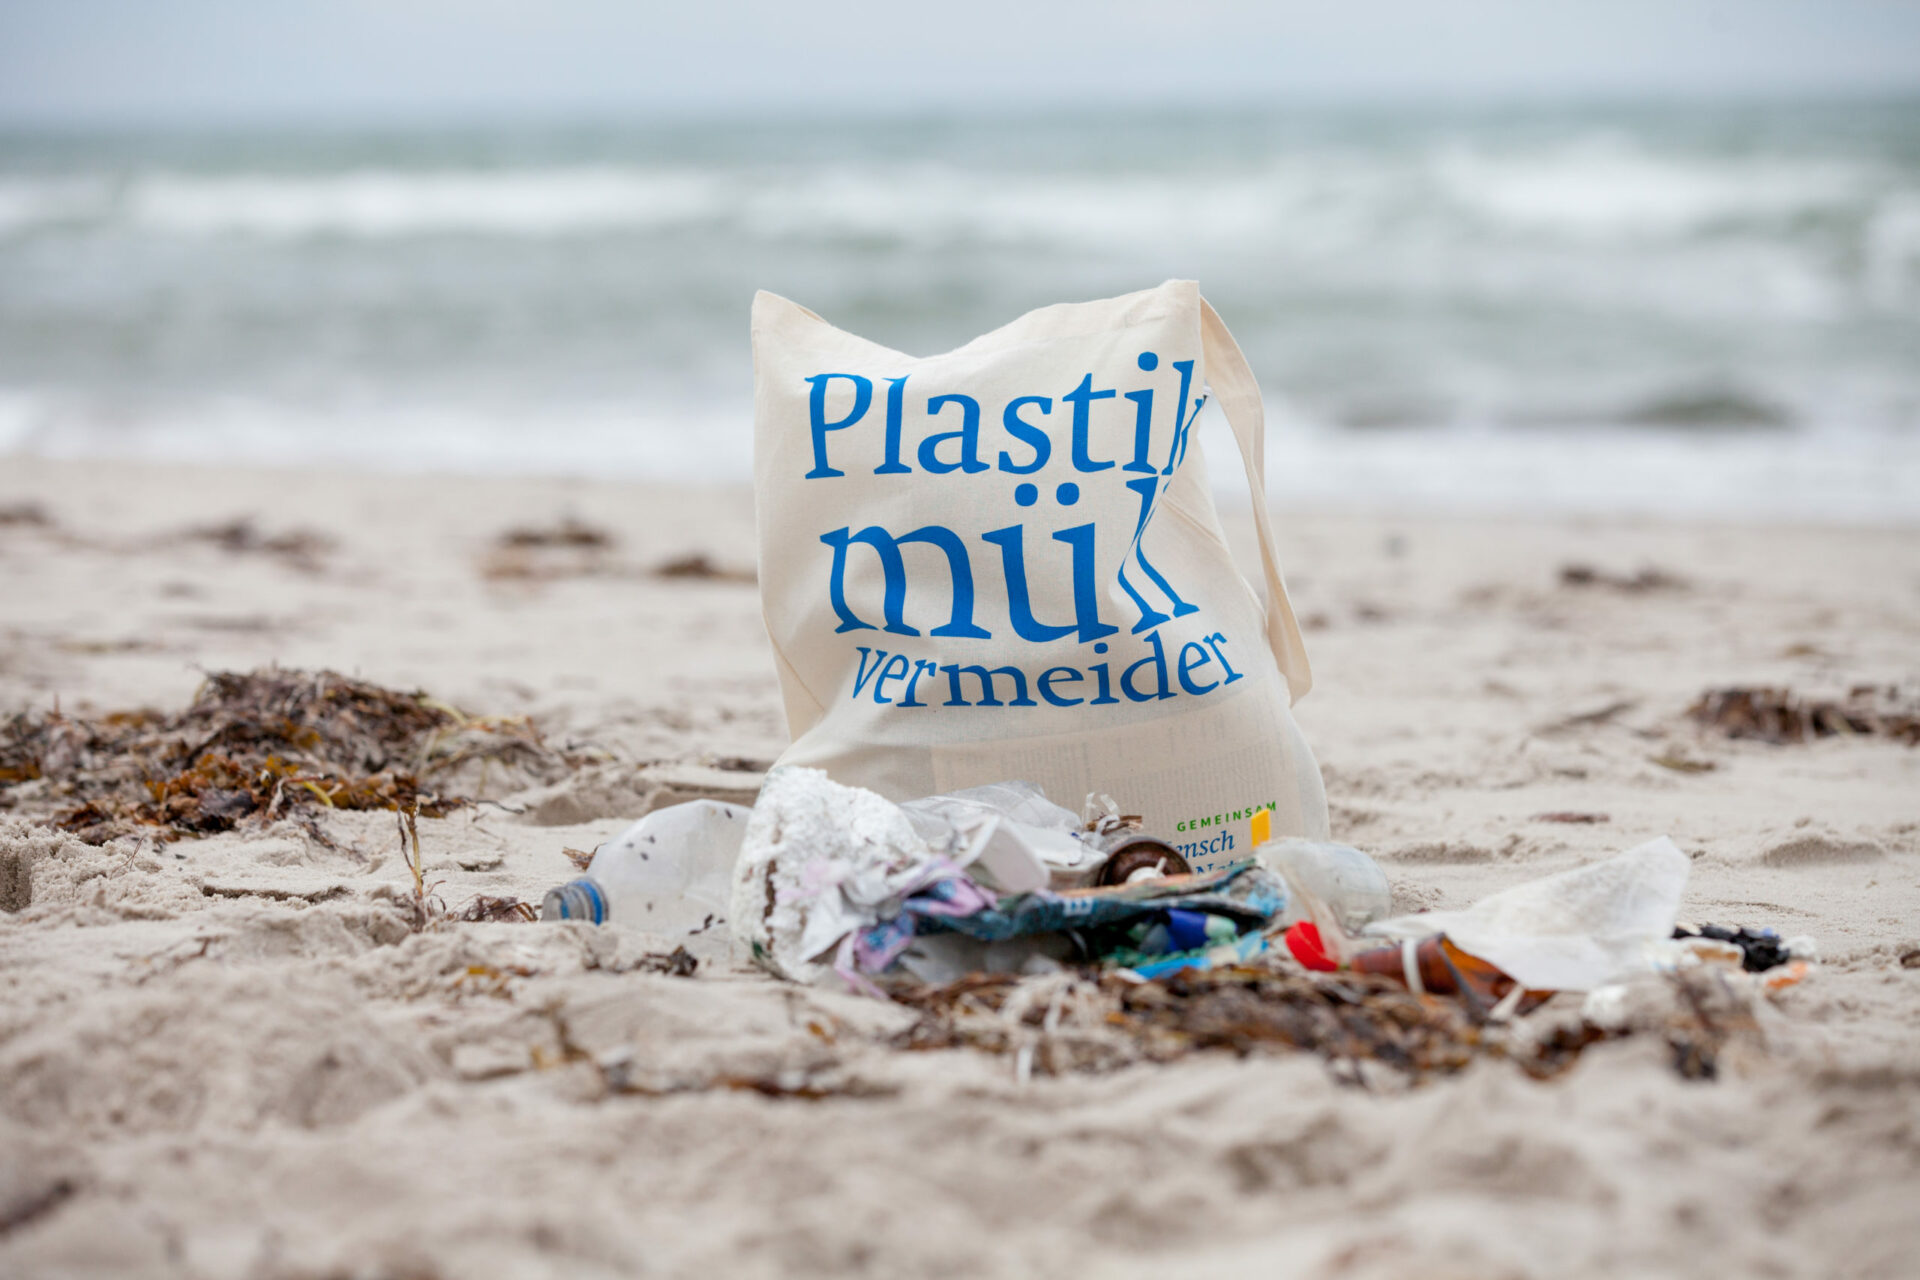 Plastikmüll vermeiden - Foto: NABU/ Felix Paulin